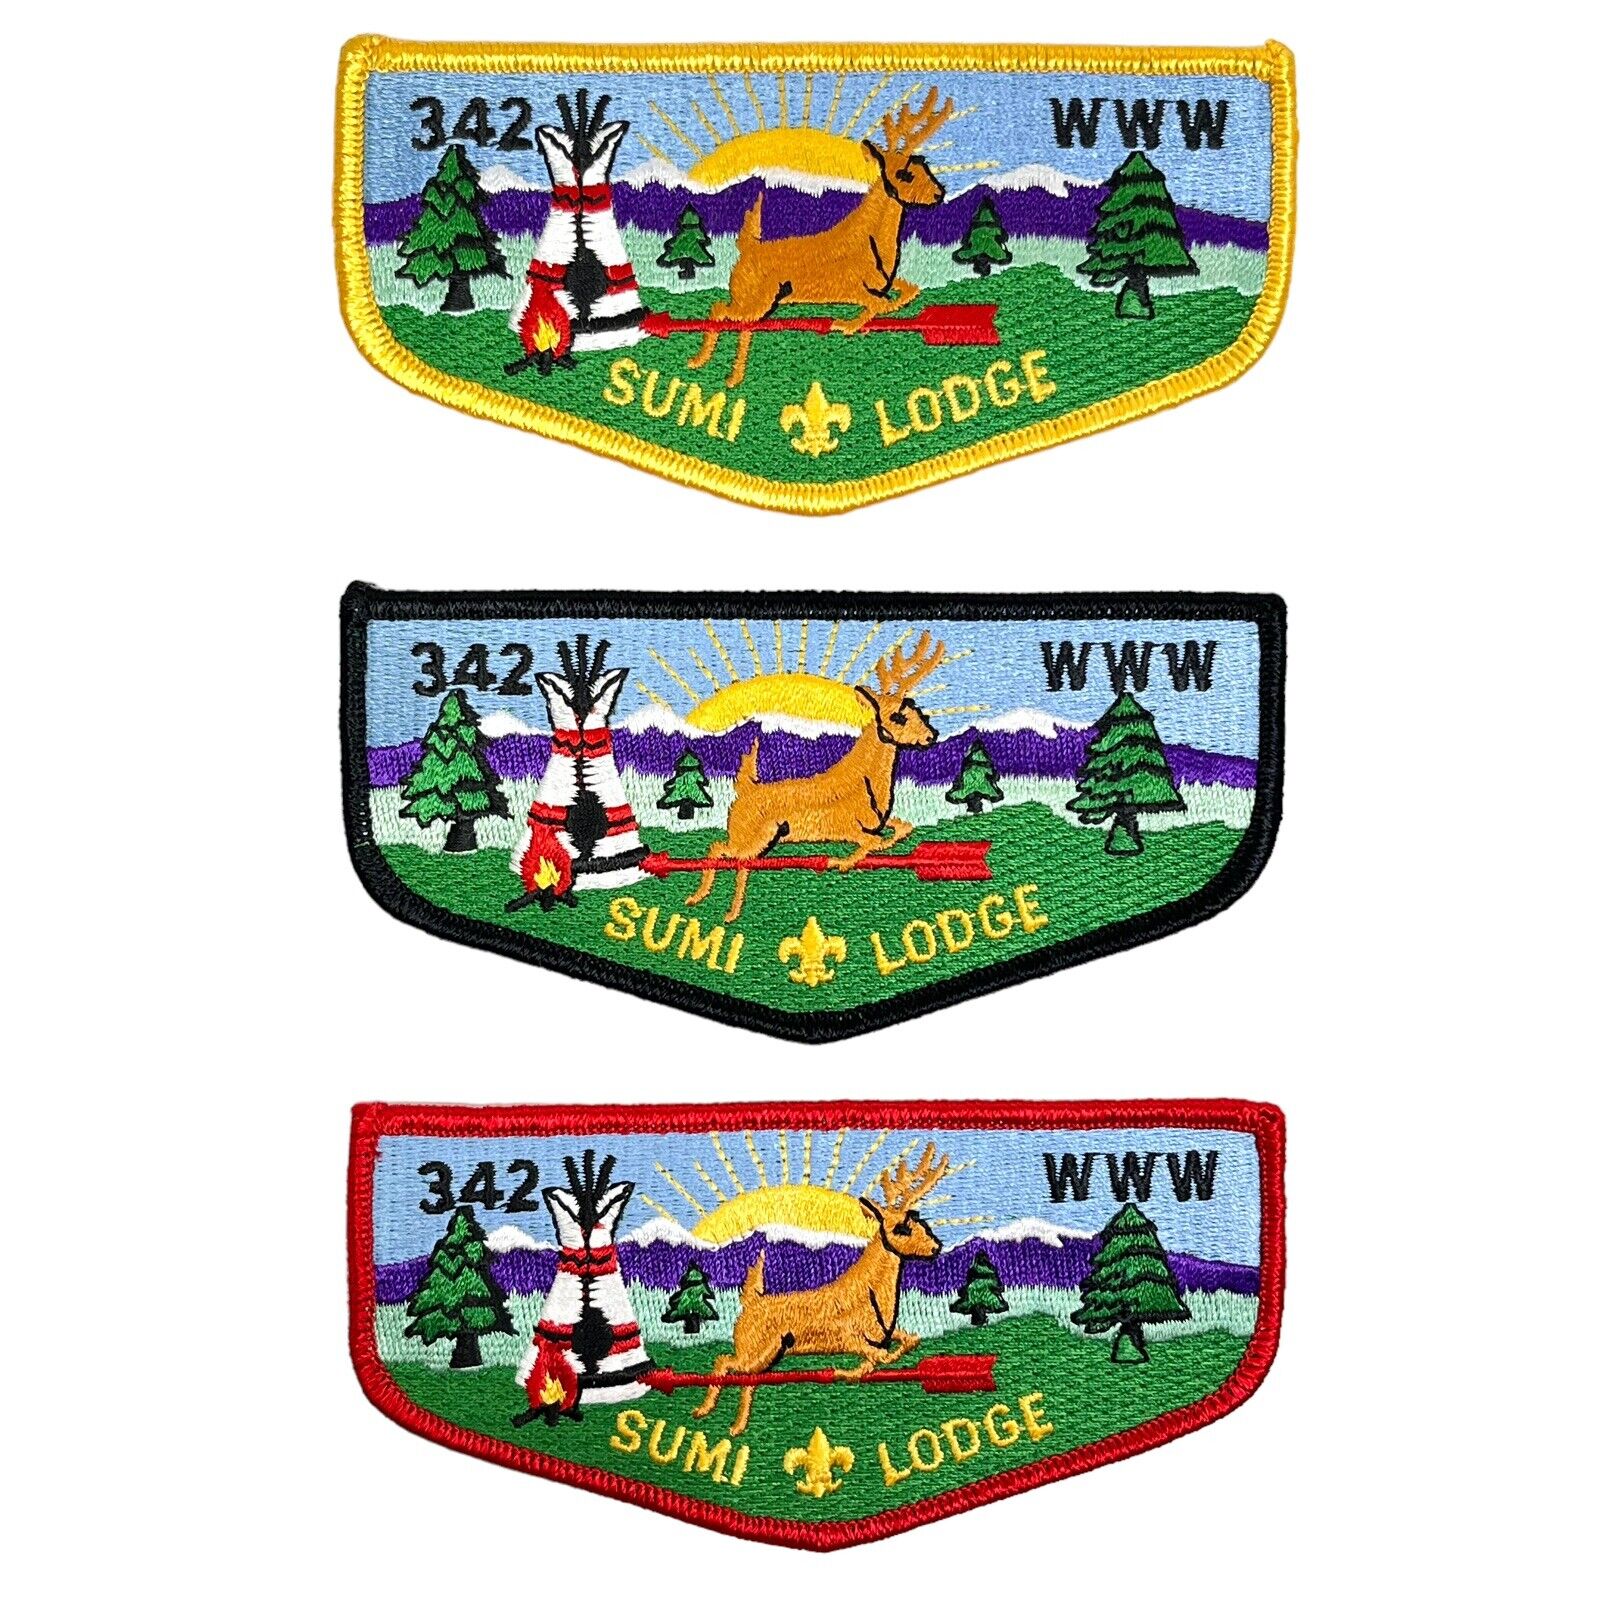 Lot of 3 Sumi Lodge 342 WWW BSA Vigil Honor Flap Patch ▪ YELLOW RED BLACK Border